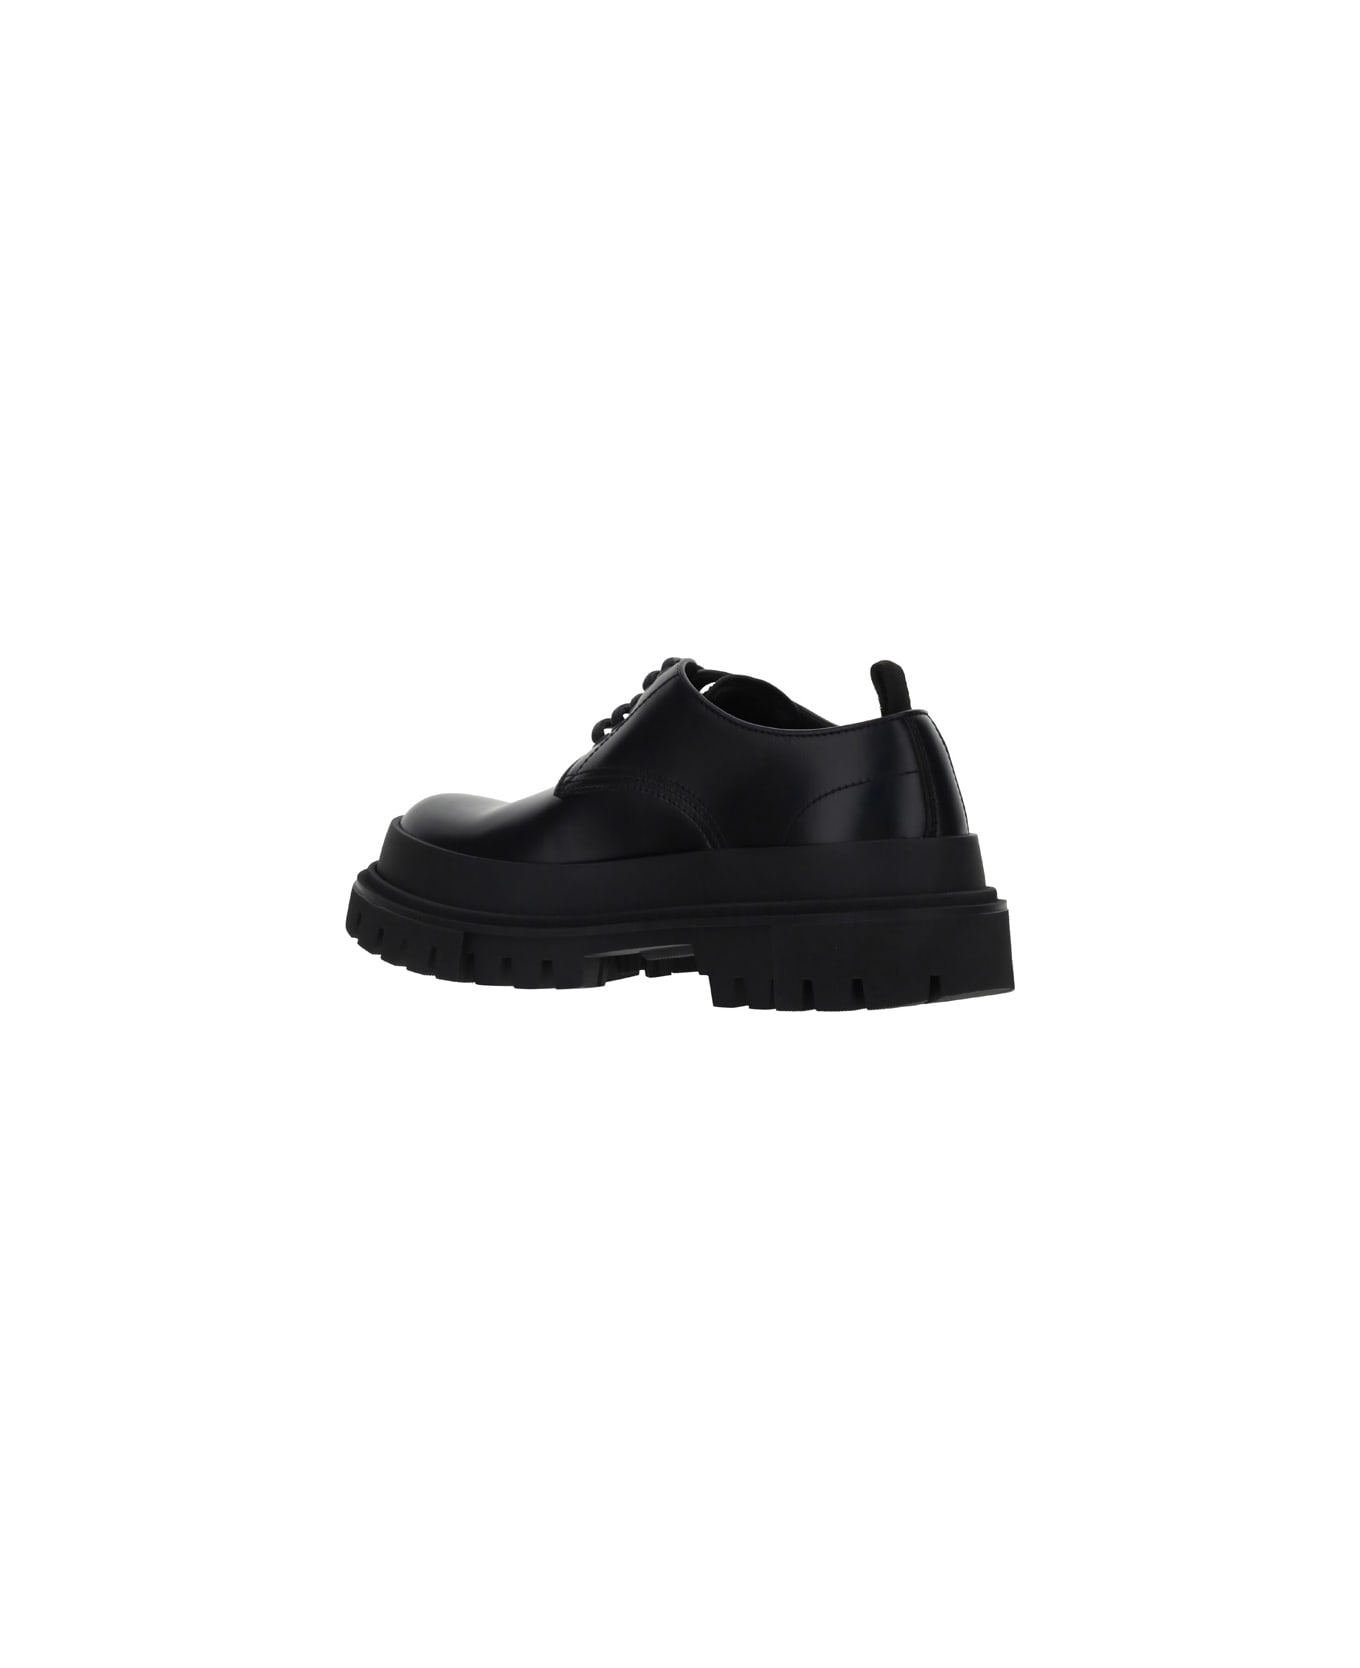 Dolce & Gabbana Lace Up Shoes - Nero/nero